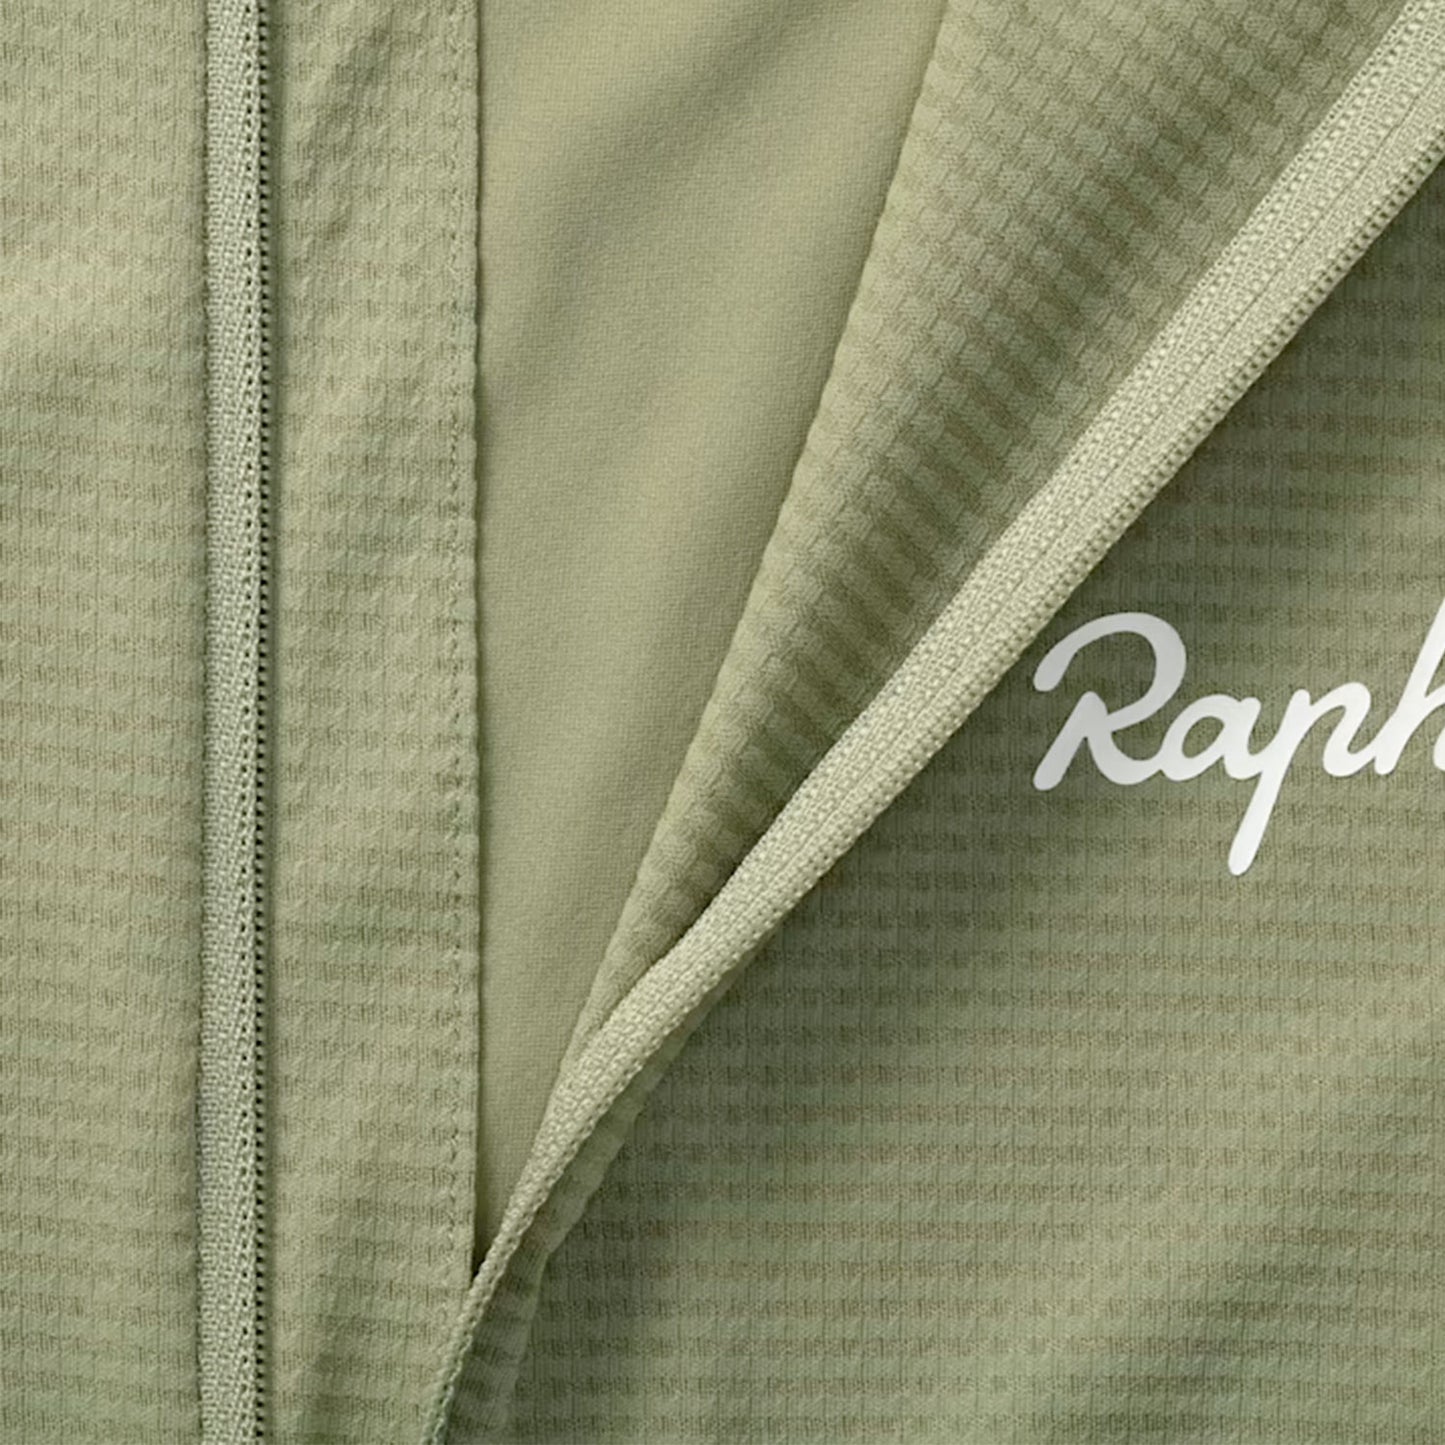 Rapha Men's Core Lightweight Jersey, Olive Green/White